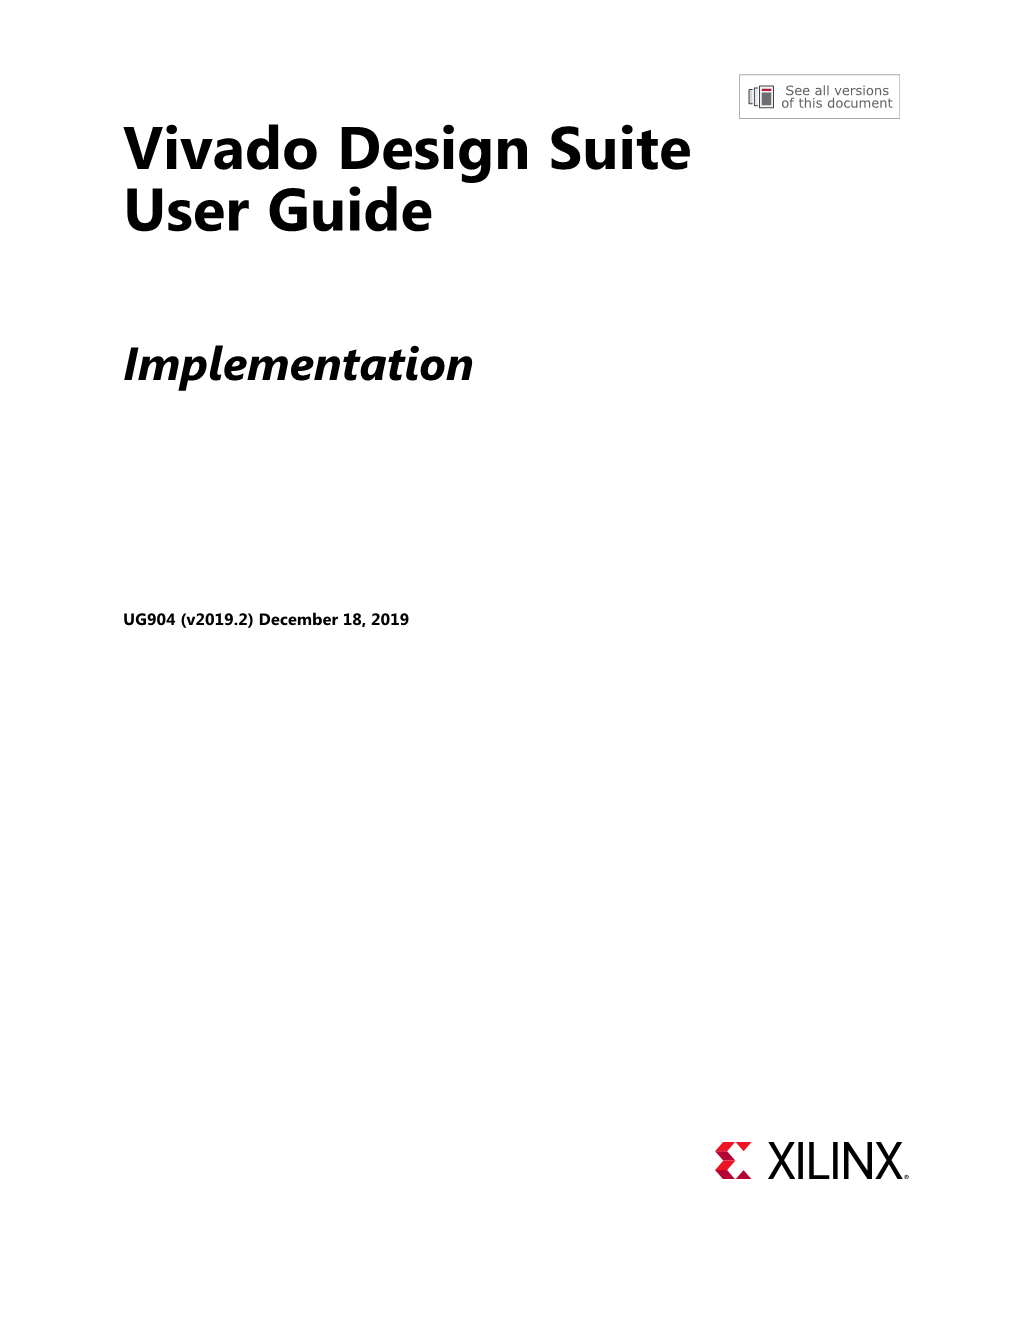 Vivado Design Suite User Guide: Implementation